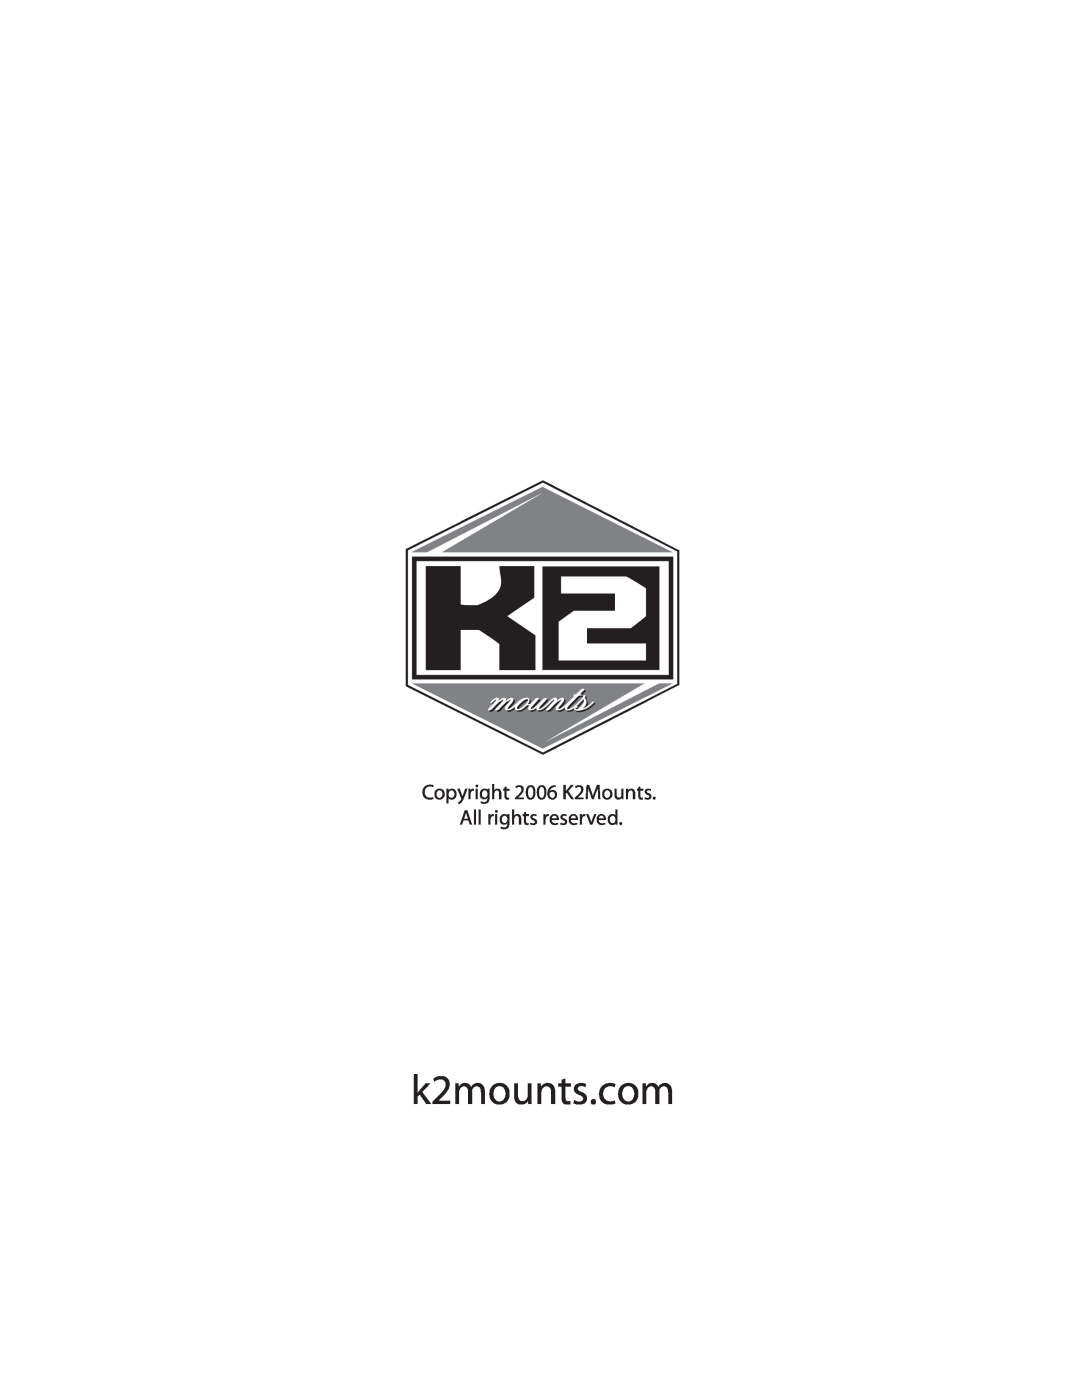 K2 Mounts K2-A3-S manual k2mounts.com, Copyright 2006 K2Mounts. All rights reserved 